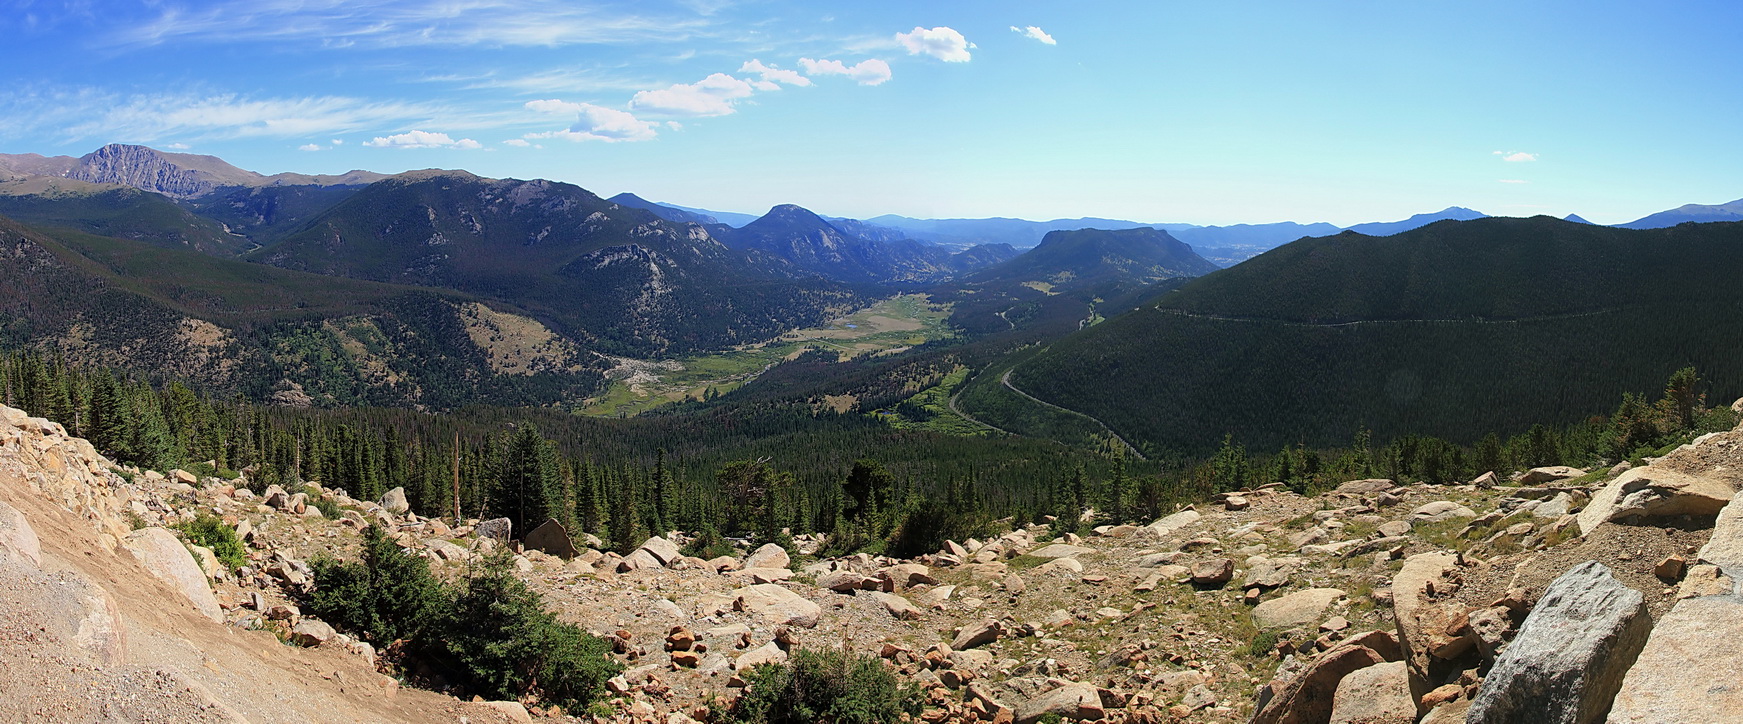 IMG_3133_stitch.jpg : 2011년 8월 Rocky Mountain National Park